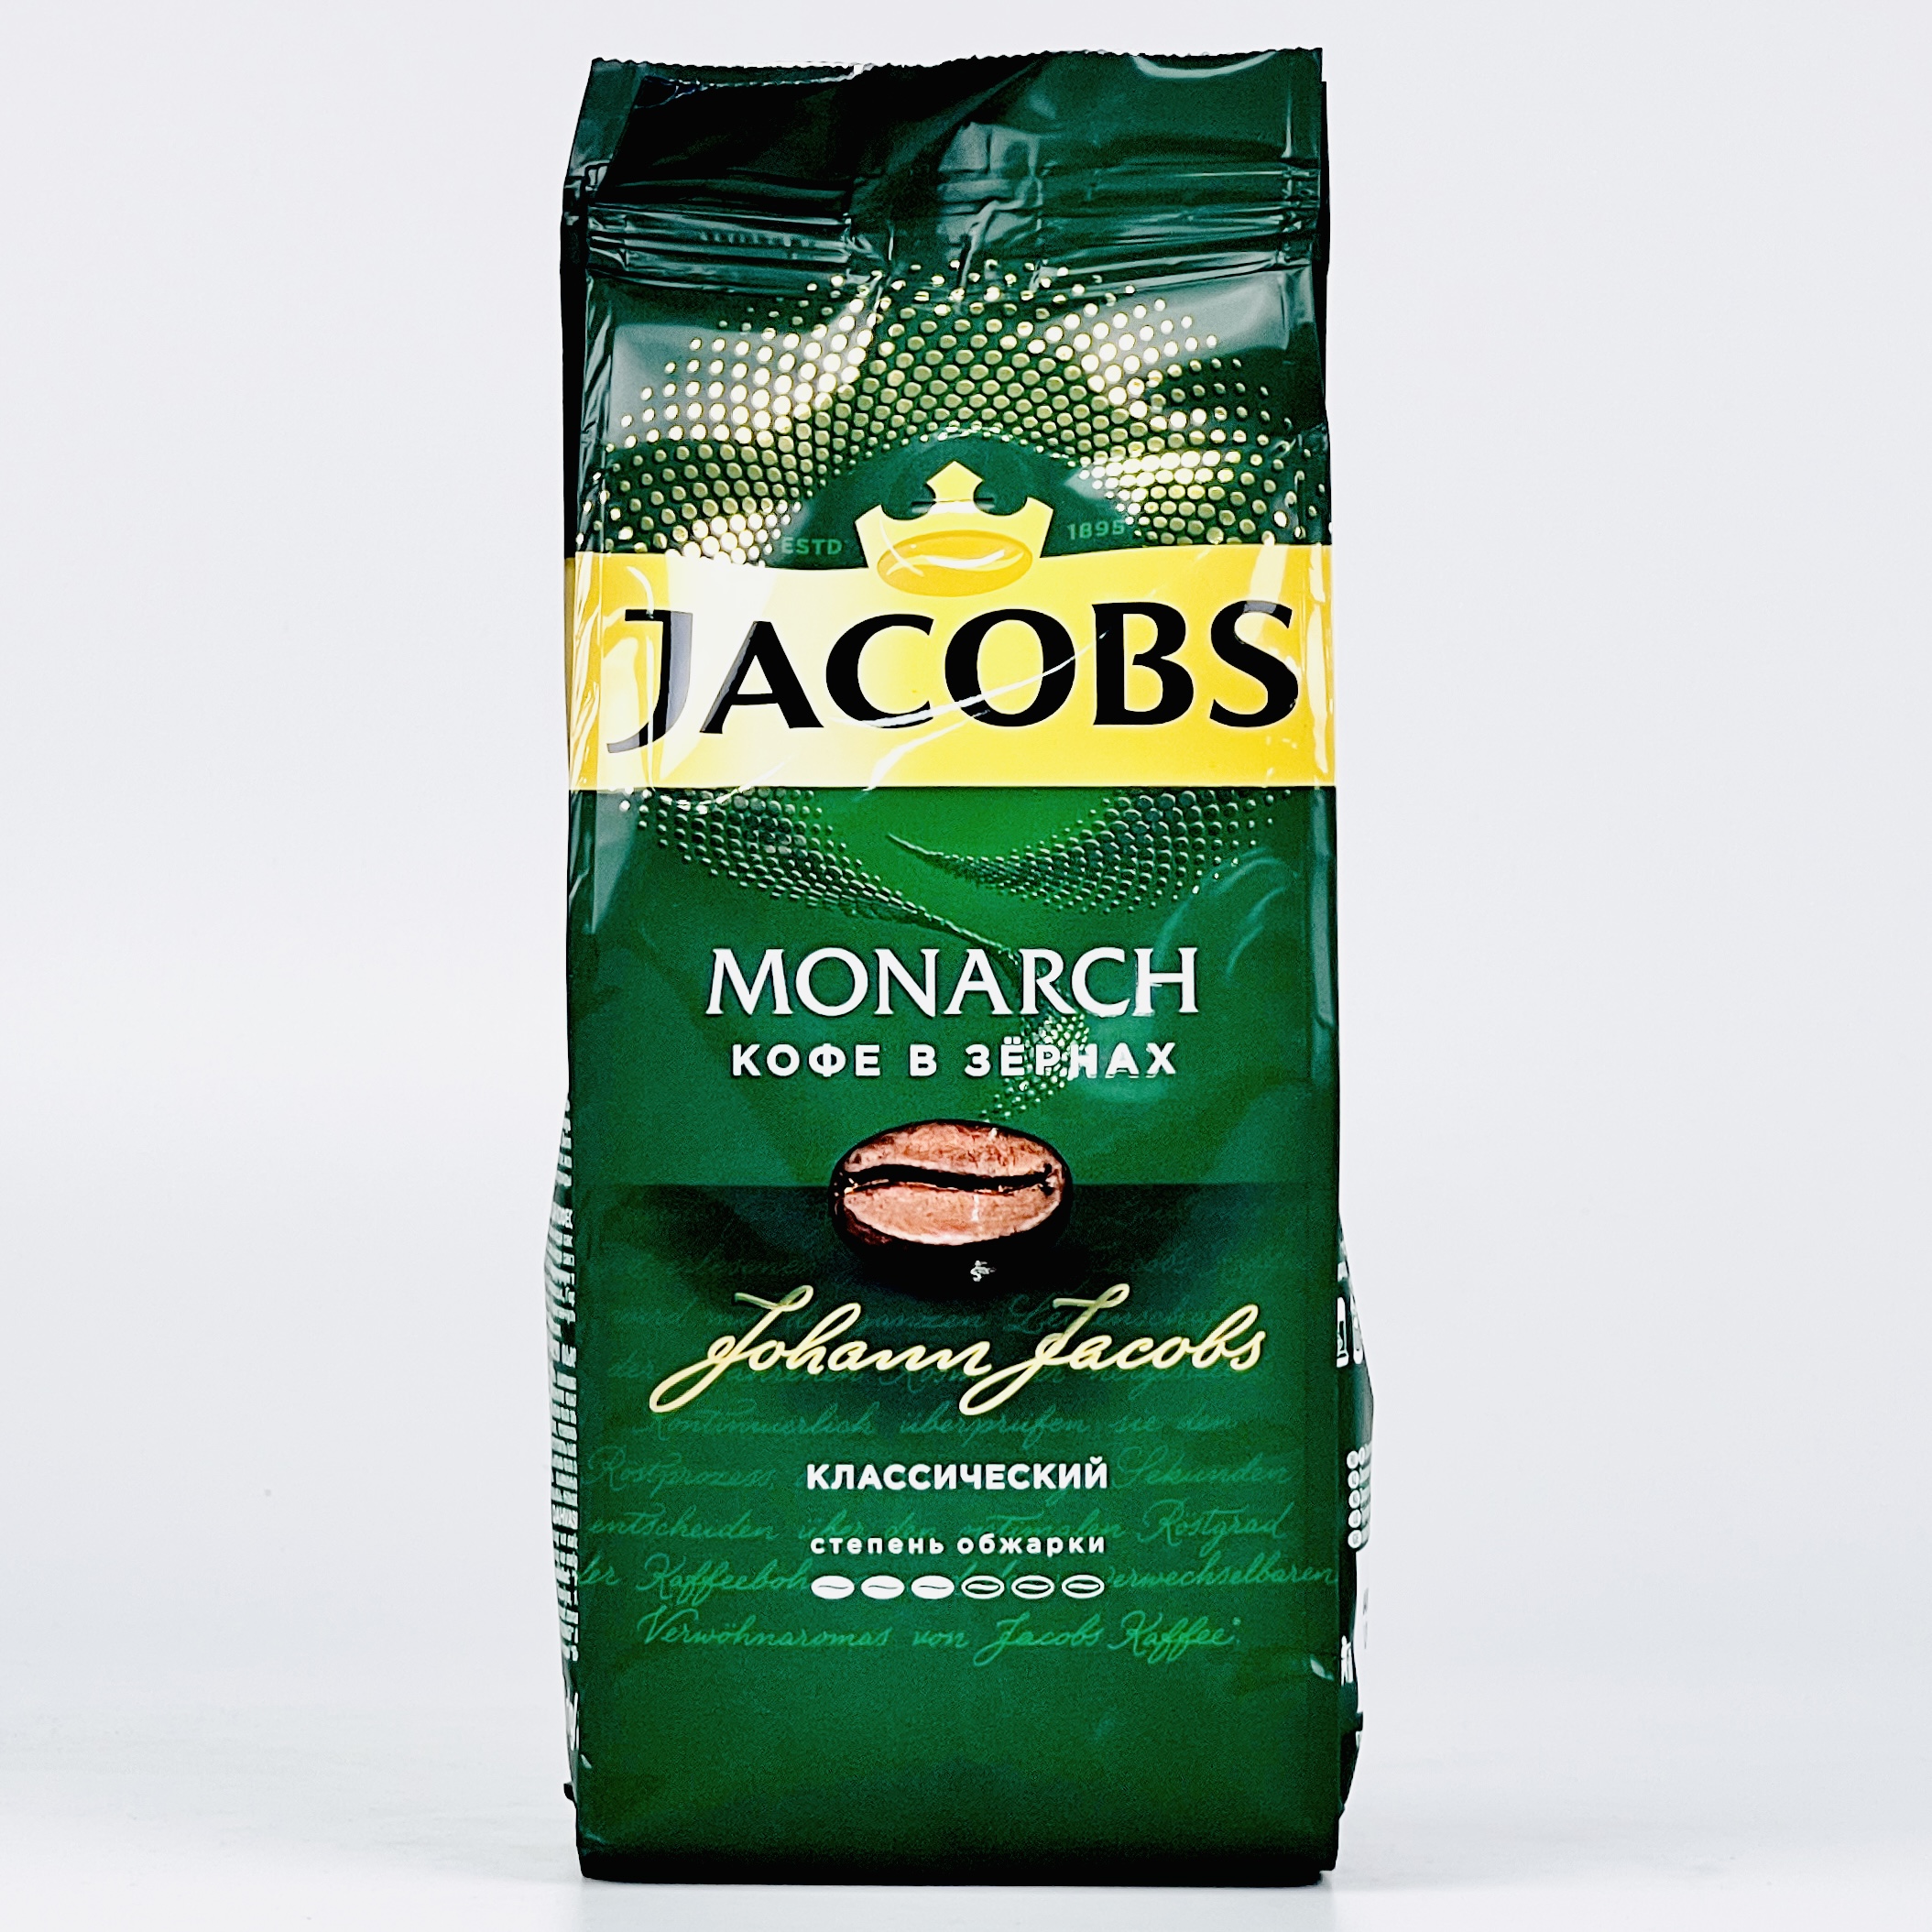 Jacobs кофе в зернах. Jacobs Monarch в зернах. Кофе в зернах Jacobs Monarch. Якобс в зернах 800 грамм.